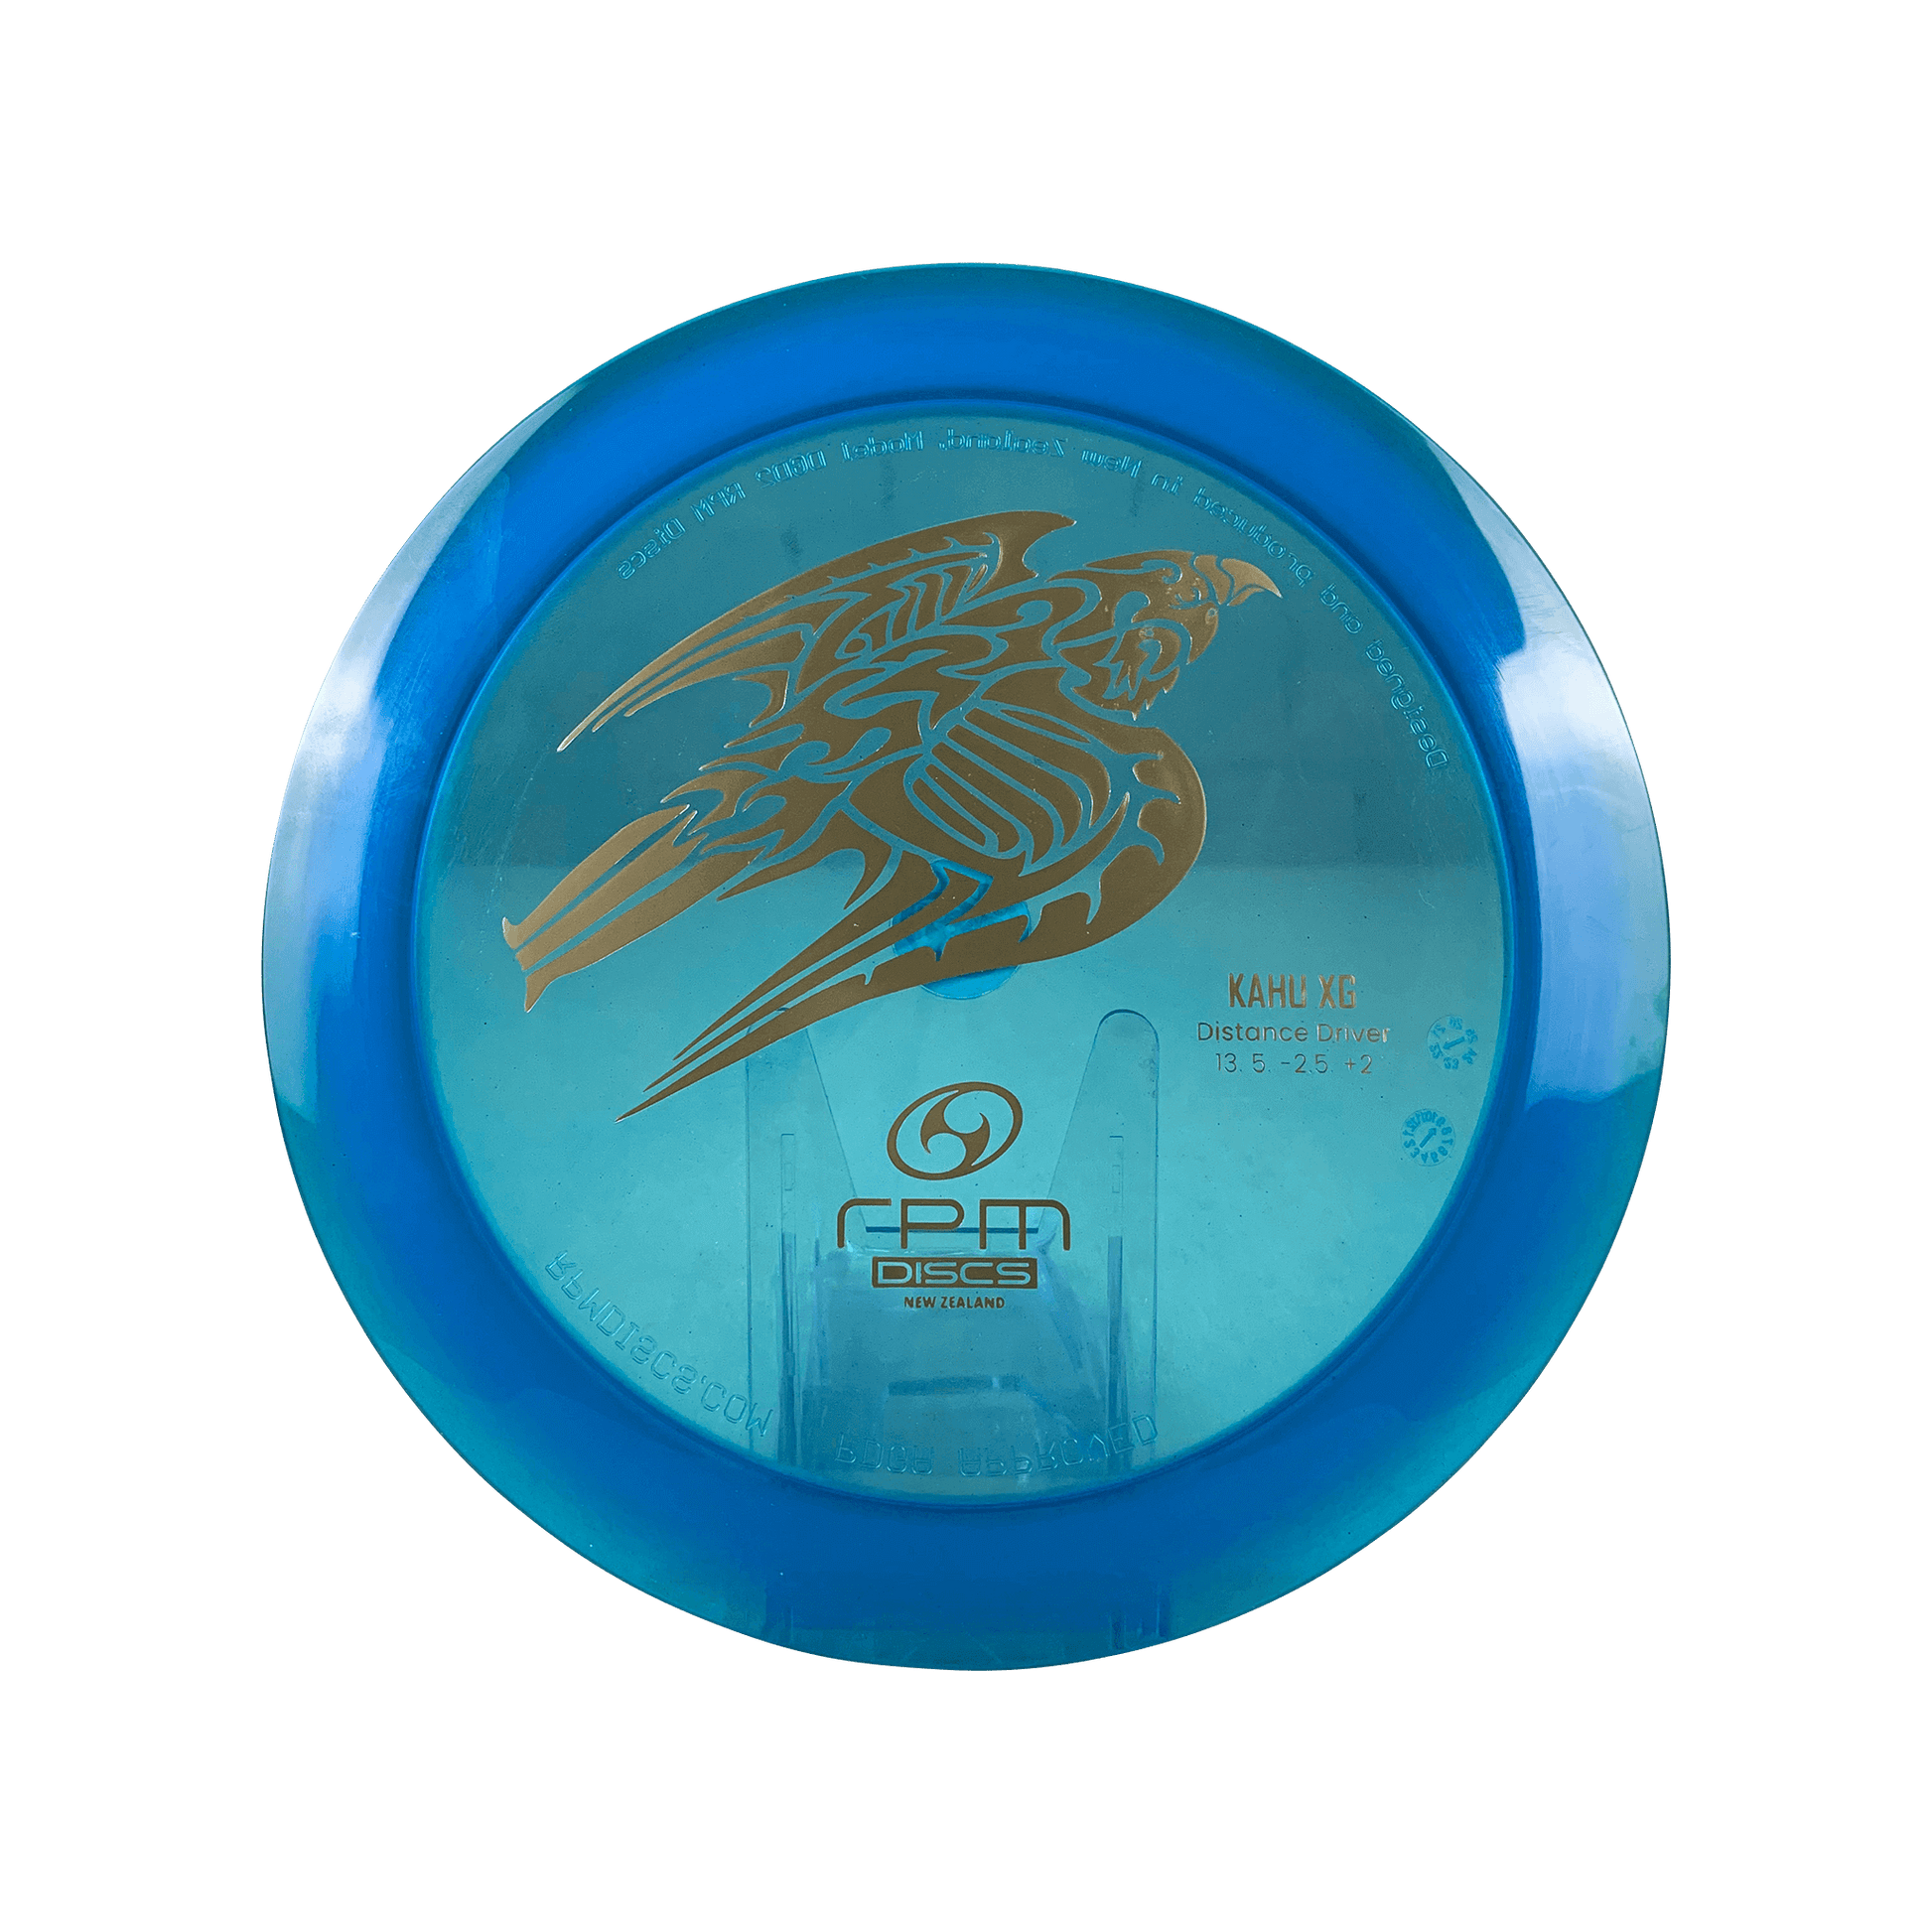 Cosmic Kahu XG Disc RPM Discs blue 173 